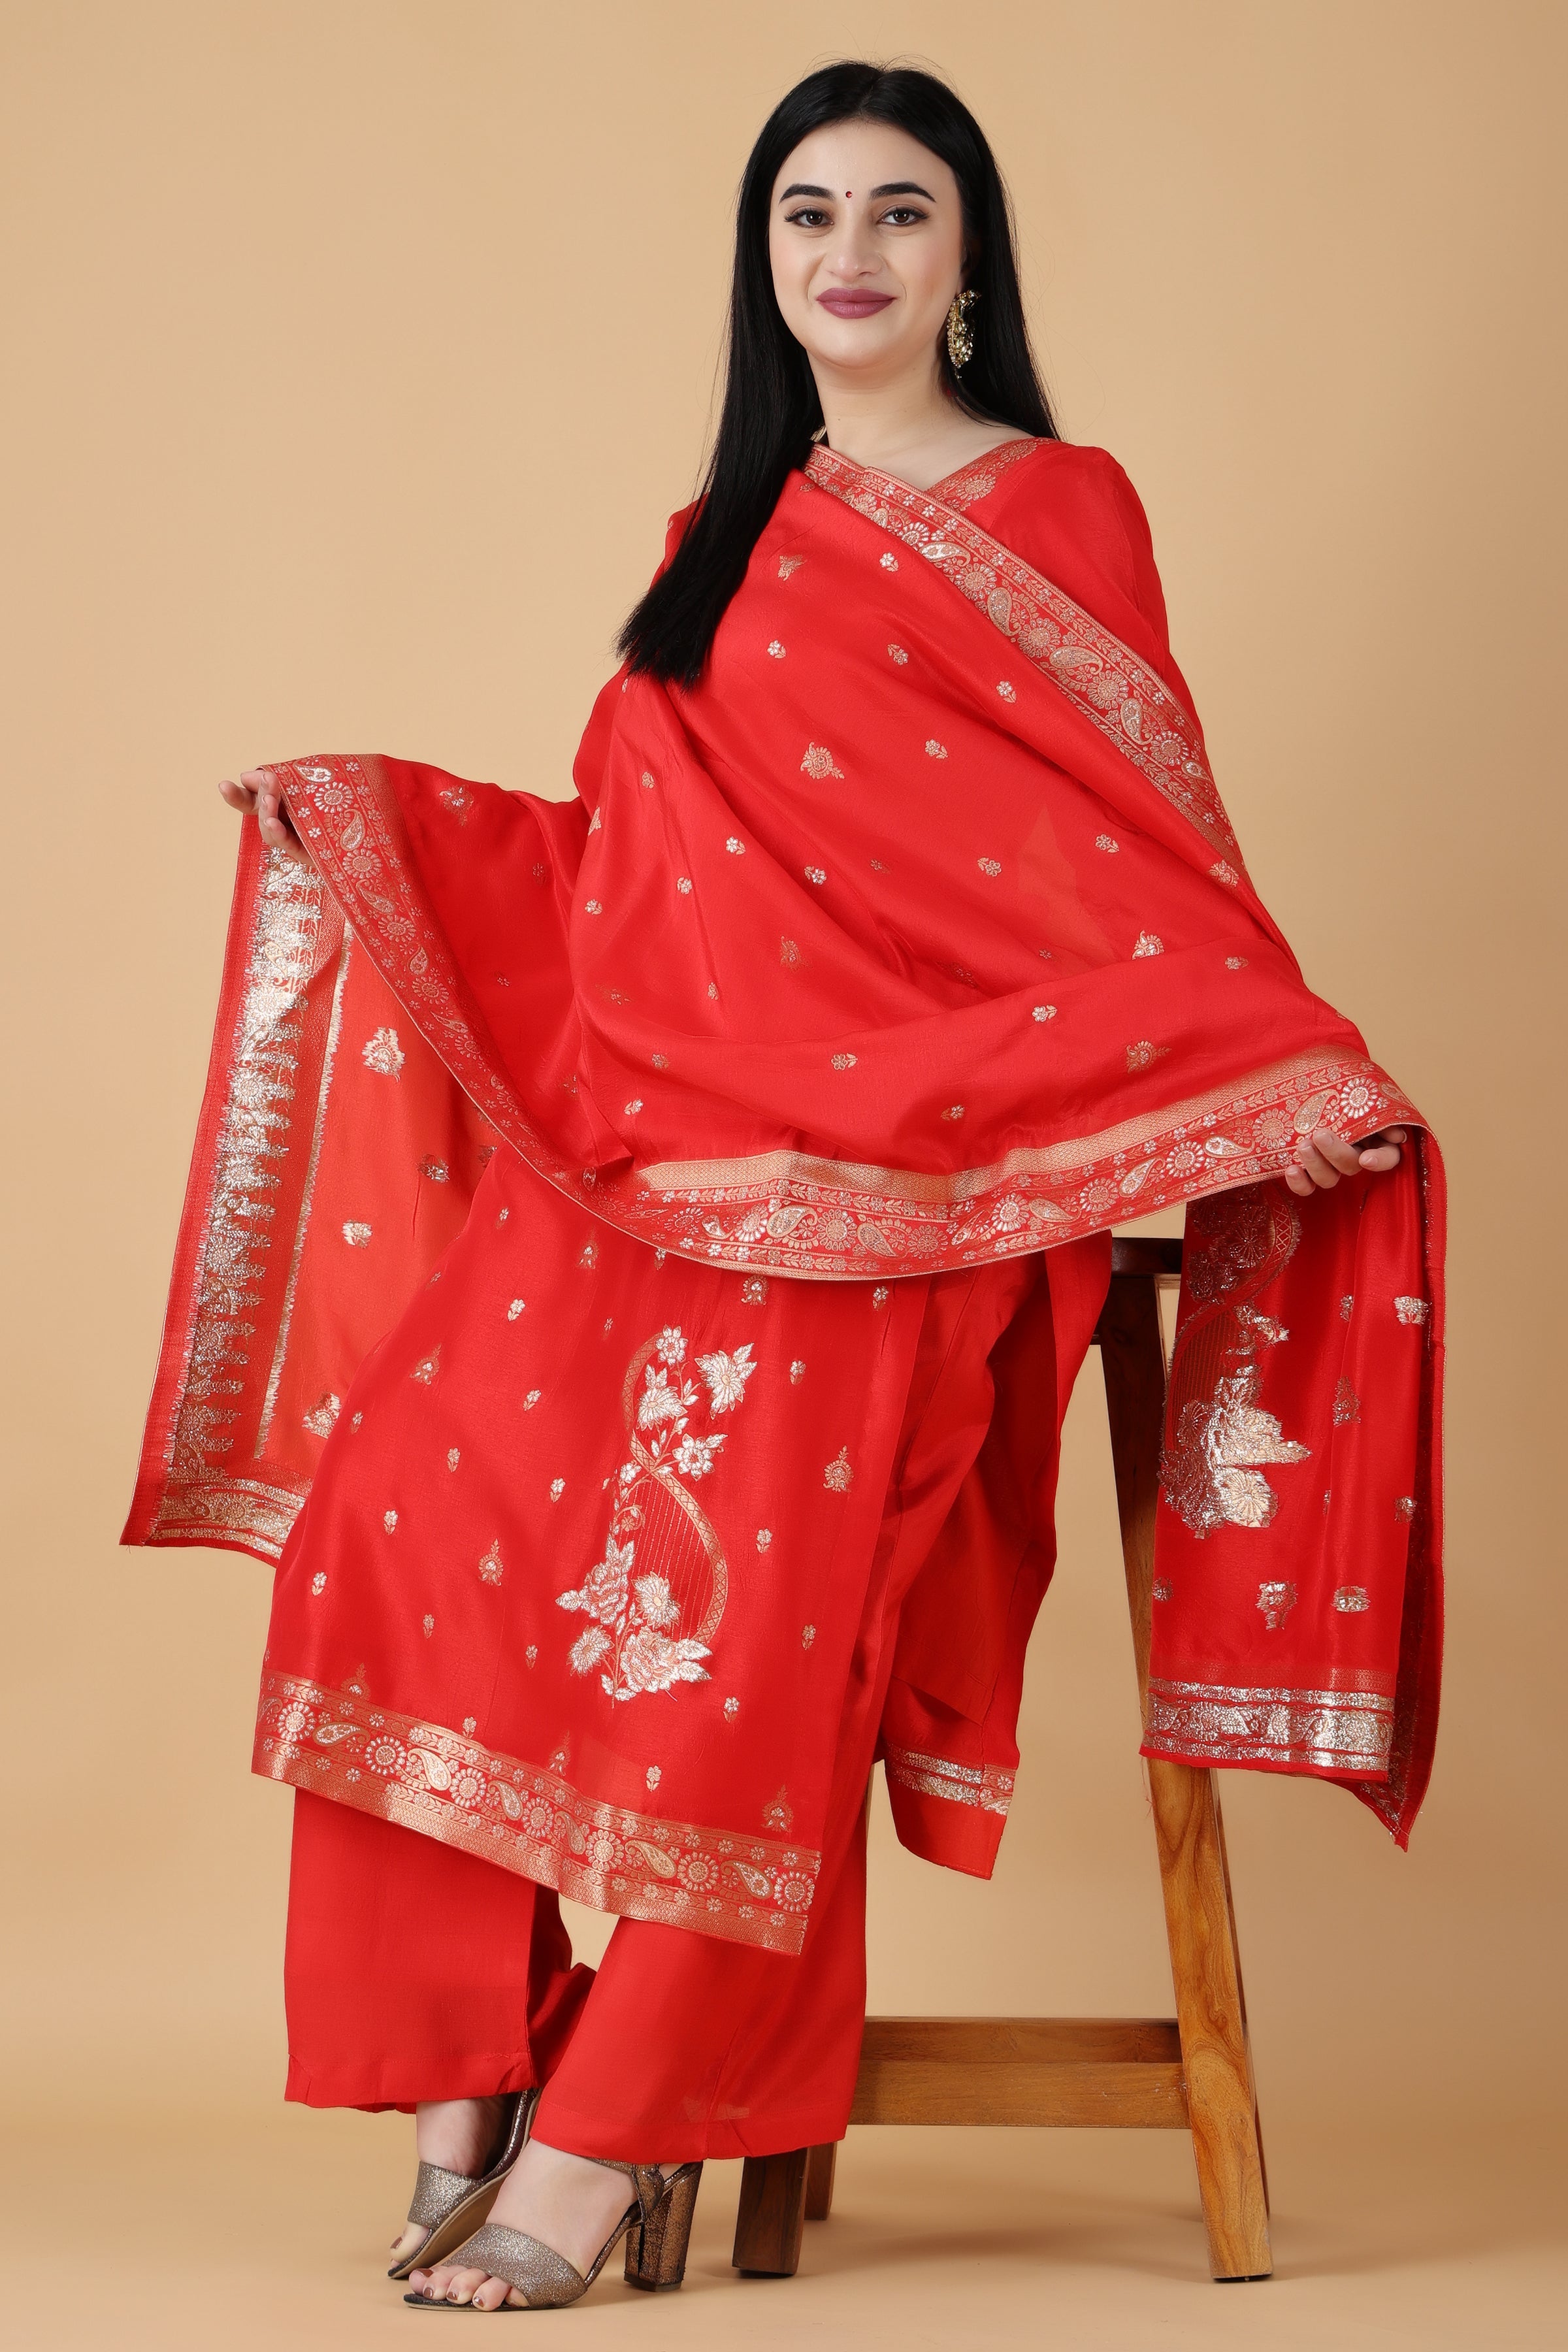 Karwa Chauth Sarees | Karva Chauth Dresses Online - IGP